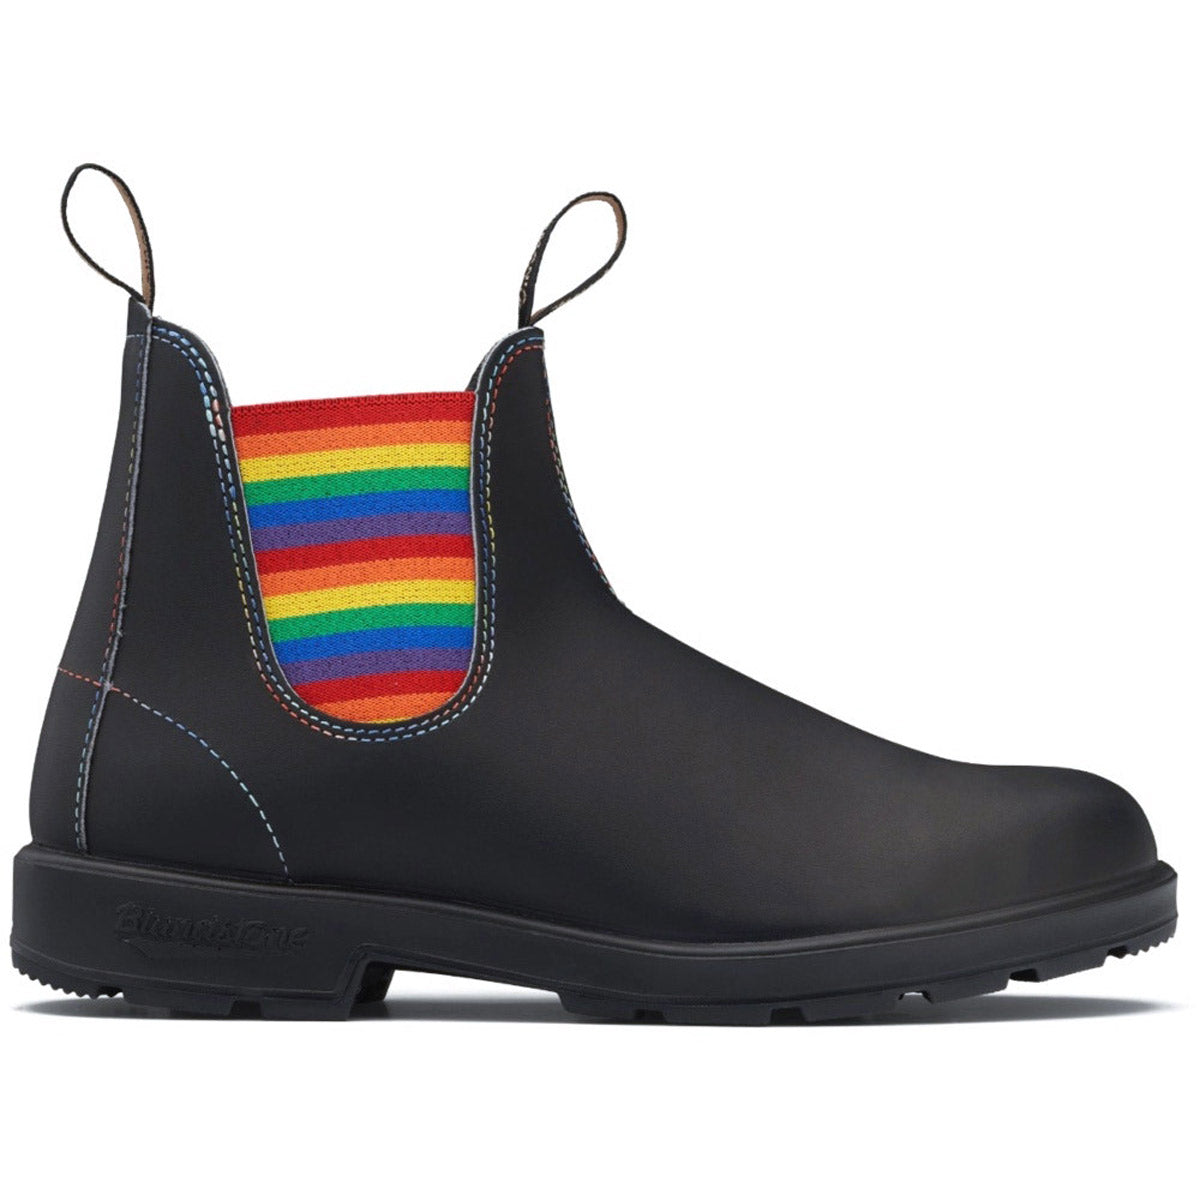 Blundstone Original 500 Series black/rainbow Chelsea boots celebrating the LGBTQIA+ community.